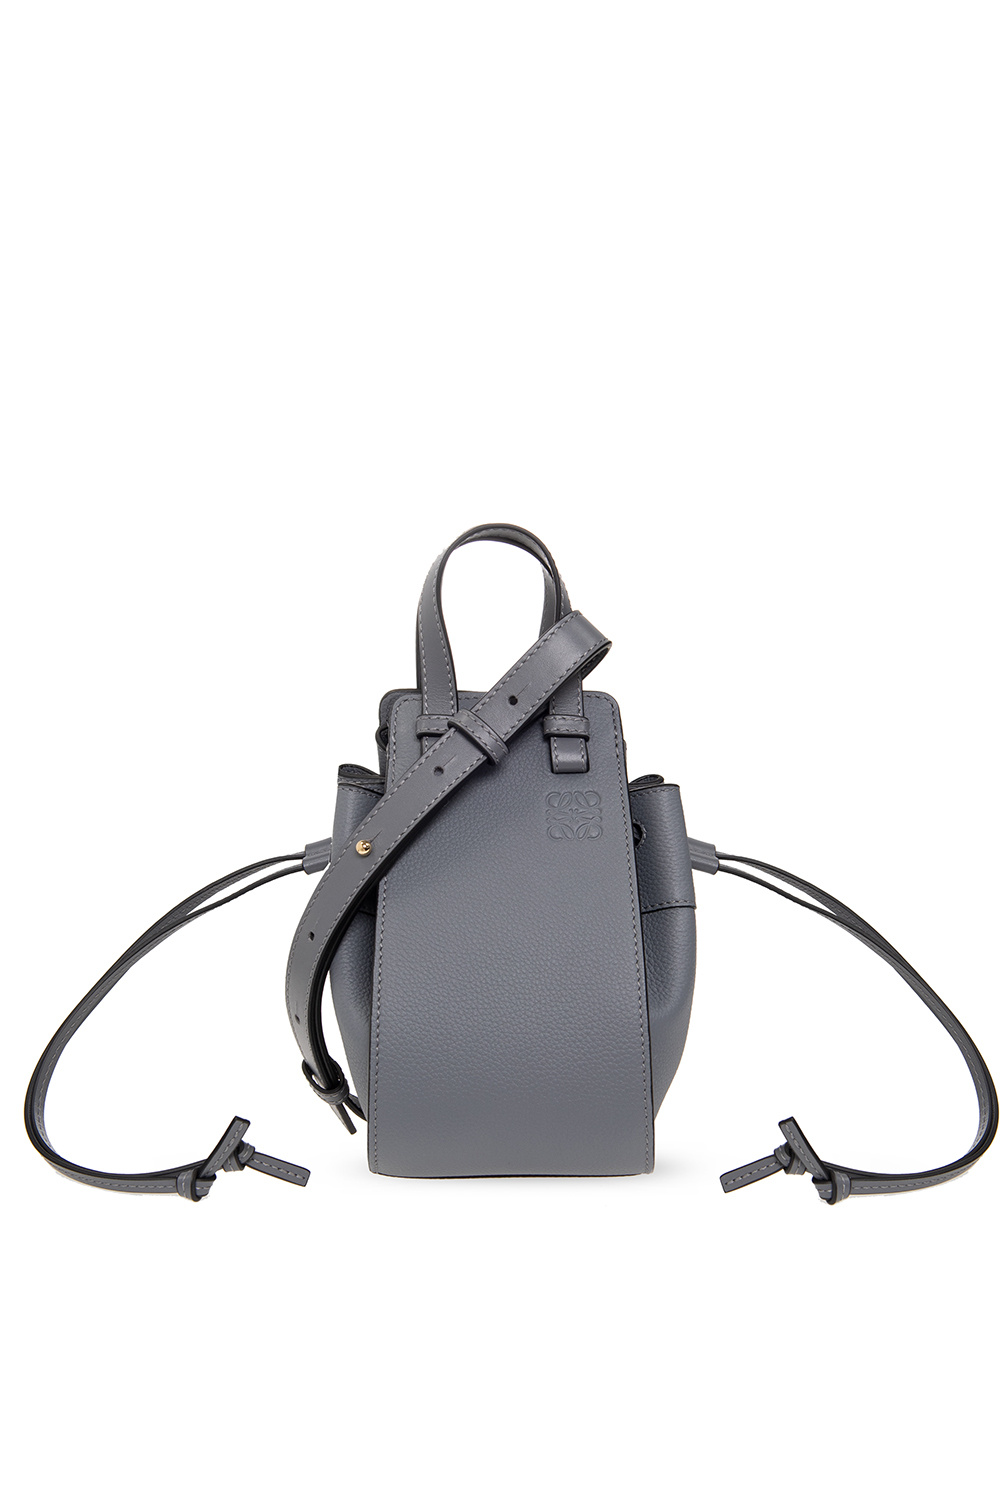 Loewe Hammock Mini Leather Shoulder Bag In Dark Taupe